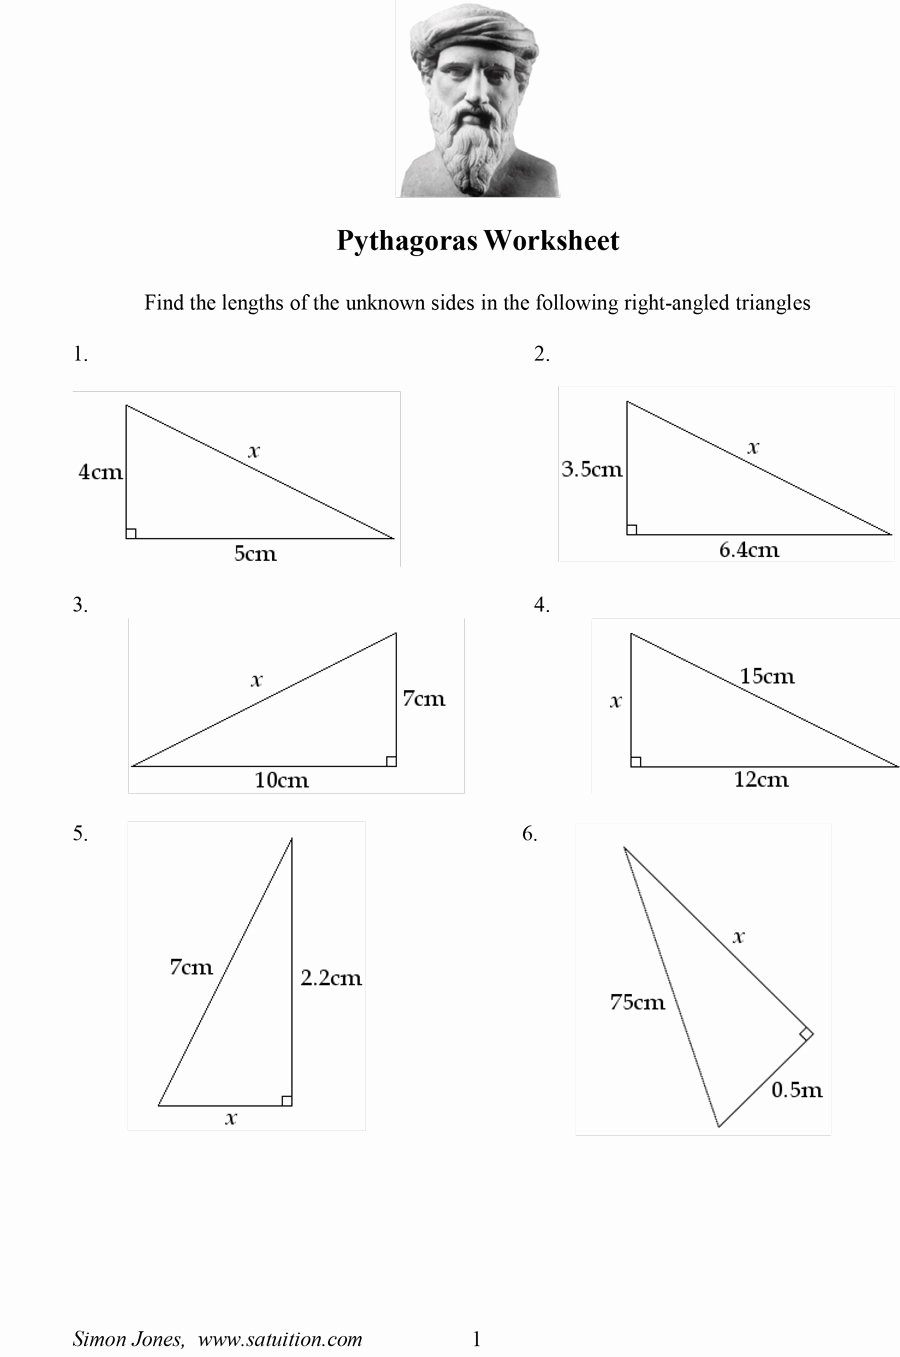 Pythagoras theorem Worksheet with Answers Lovely 48 Pythagorean theorem Worksheet with Answers [word Pdf]